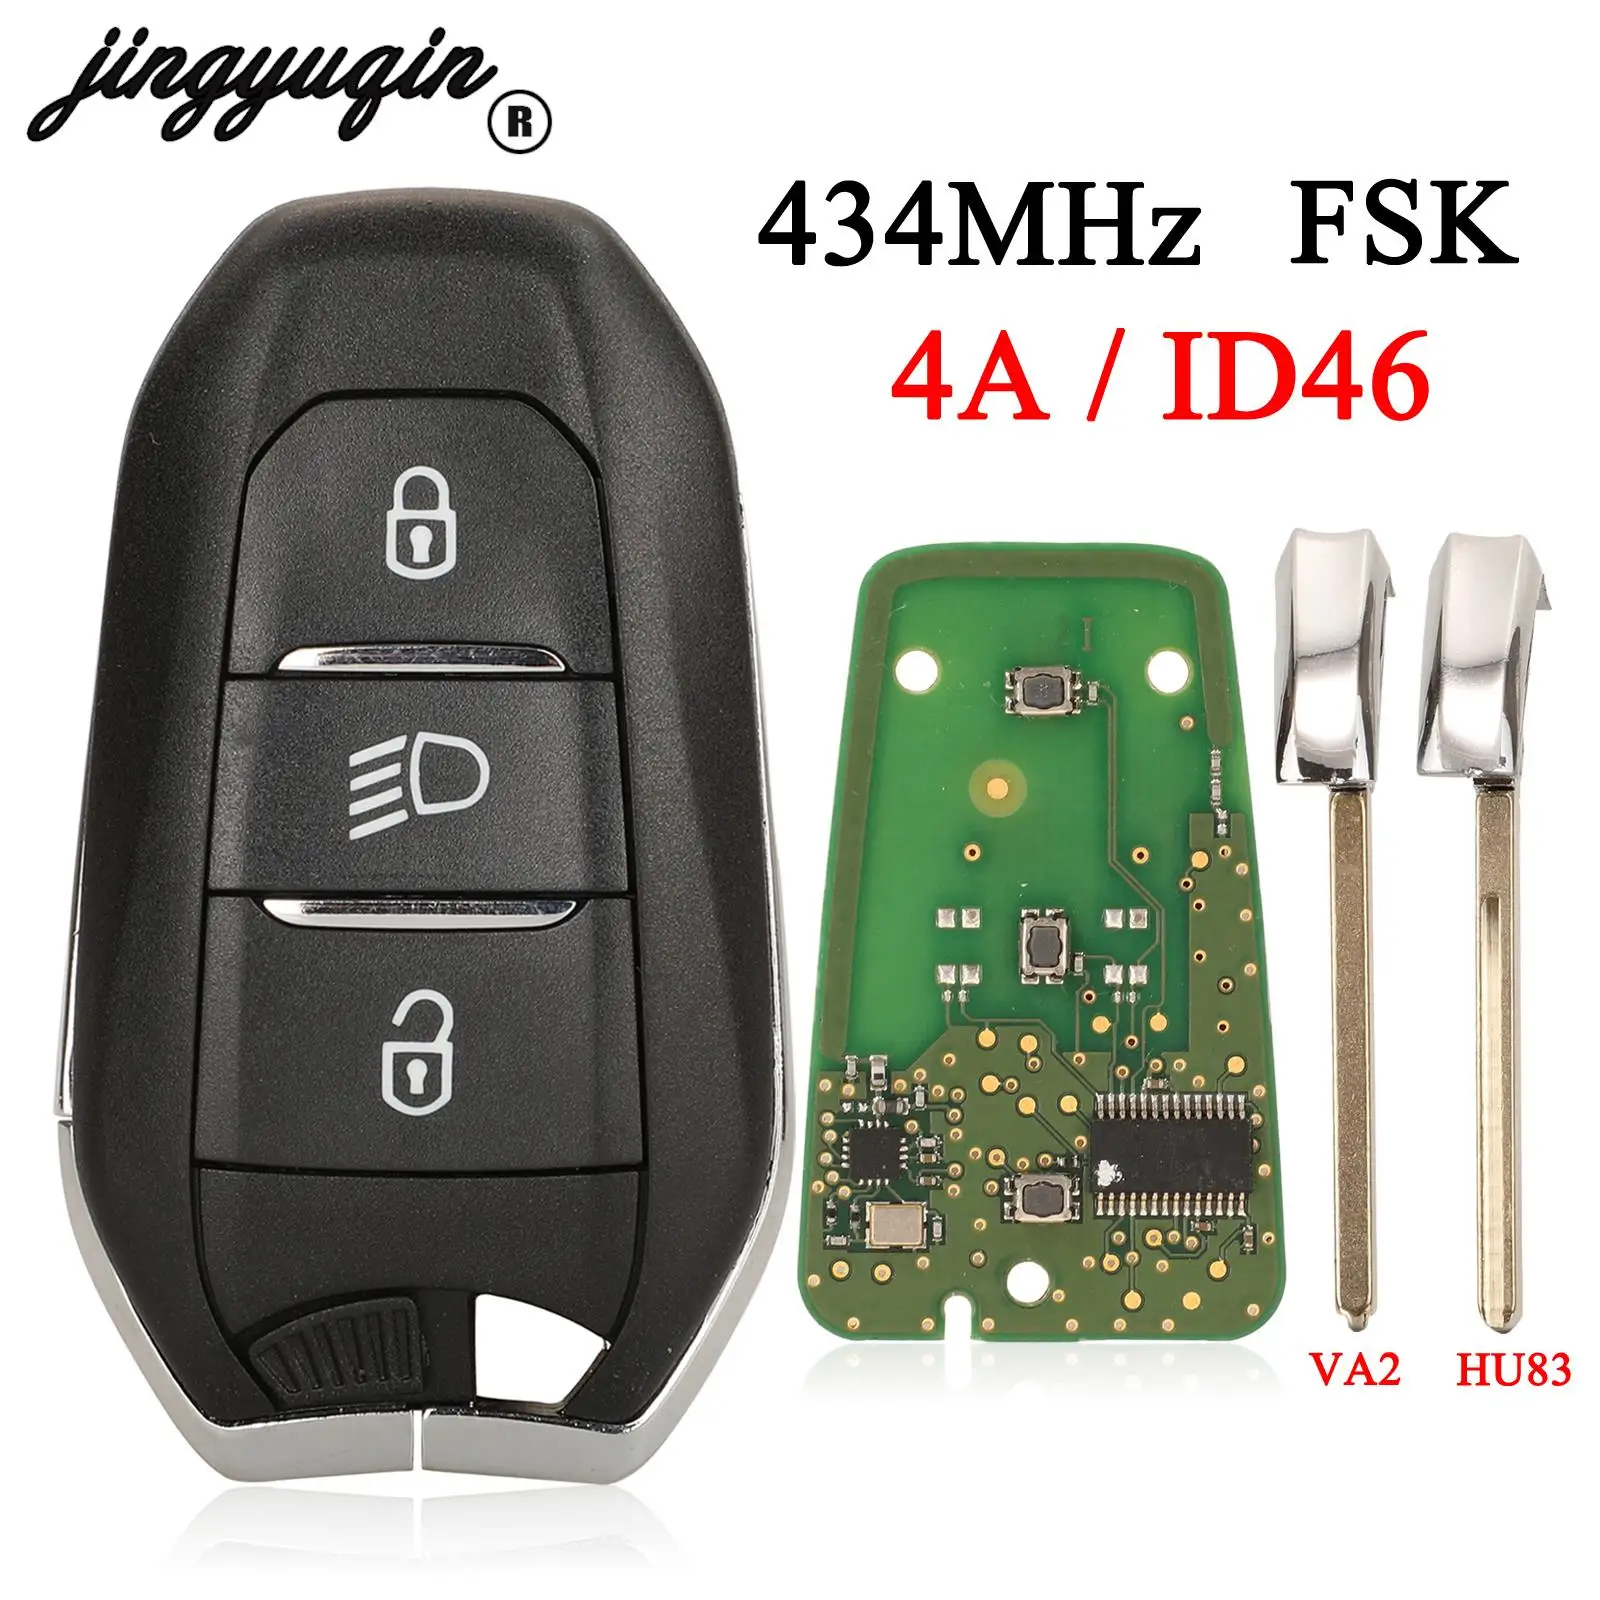 

jingyuqin Remote Control Car Key 434Mhz FSK 4A / ID46 Chip For Peugeot 3008 5008 Fit Citroen C3 C5 VA2 HU83 Blade Fob 3Buttons